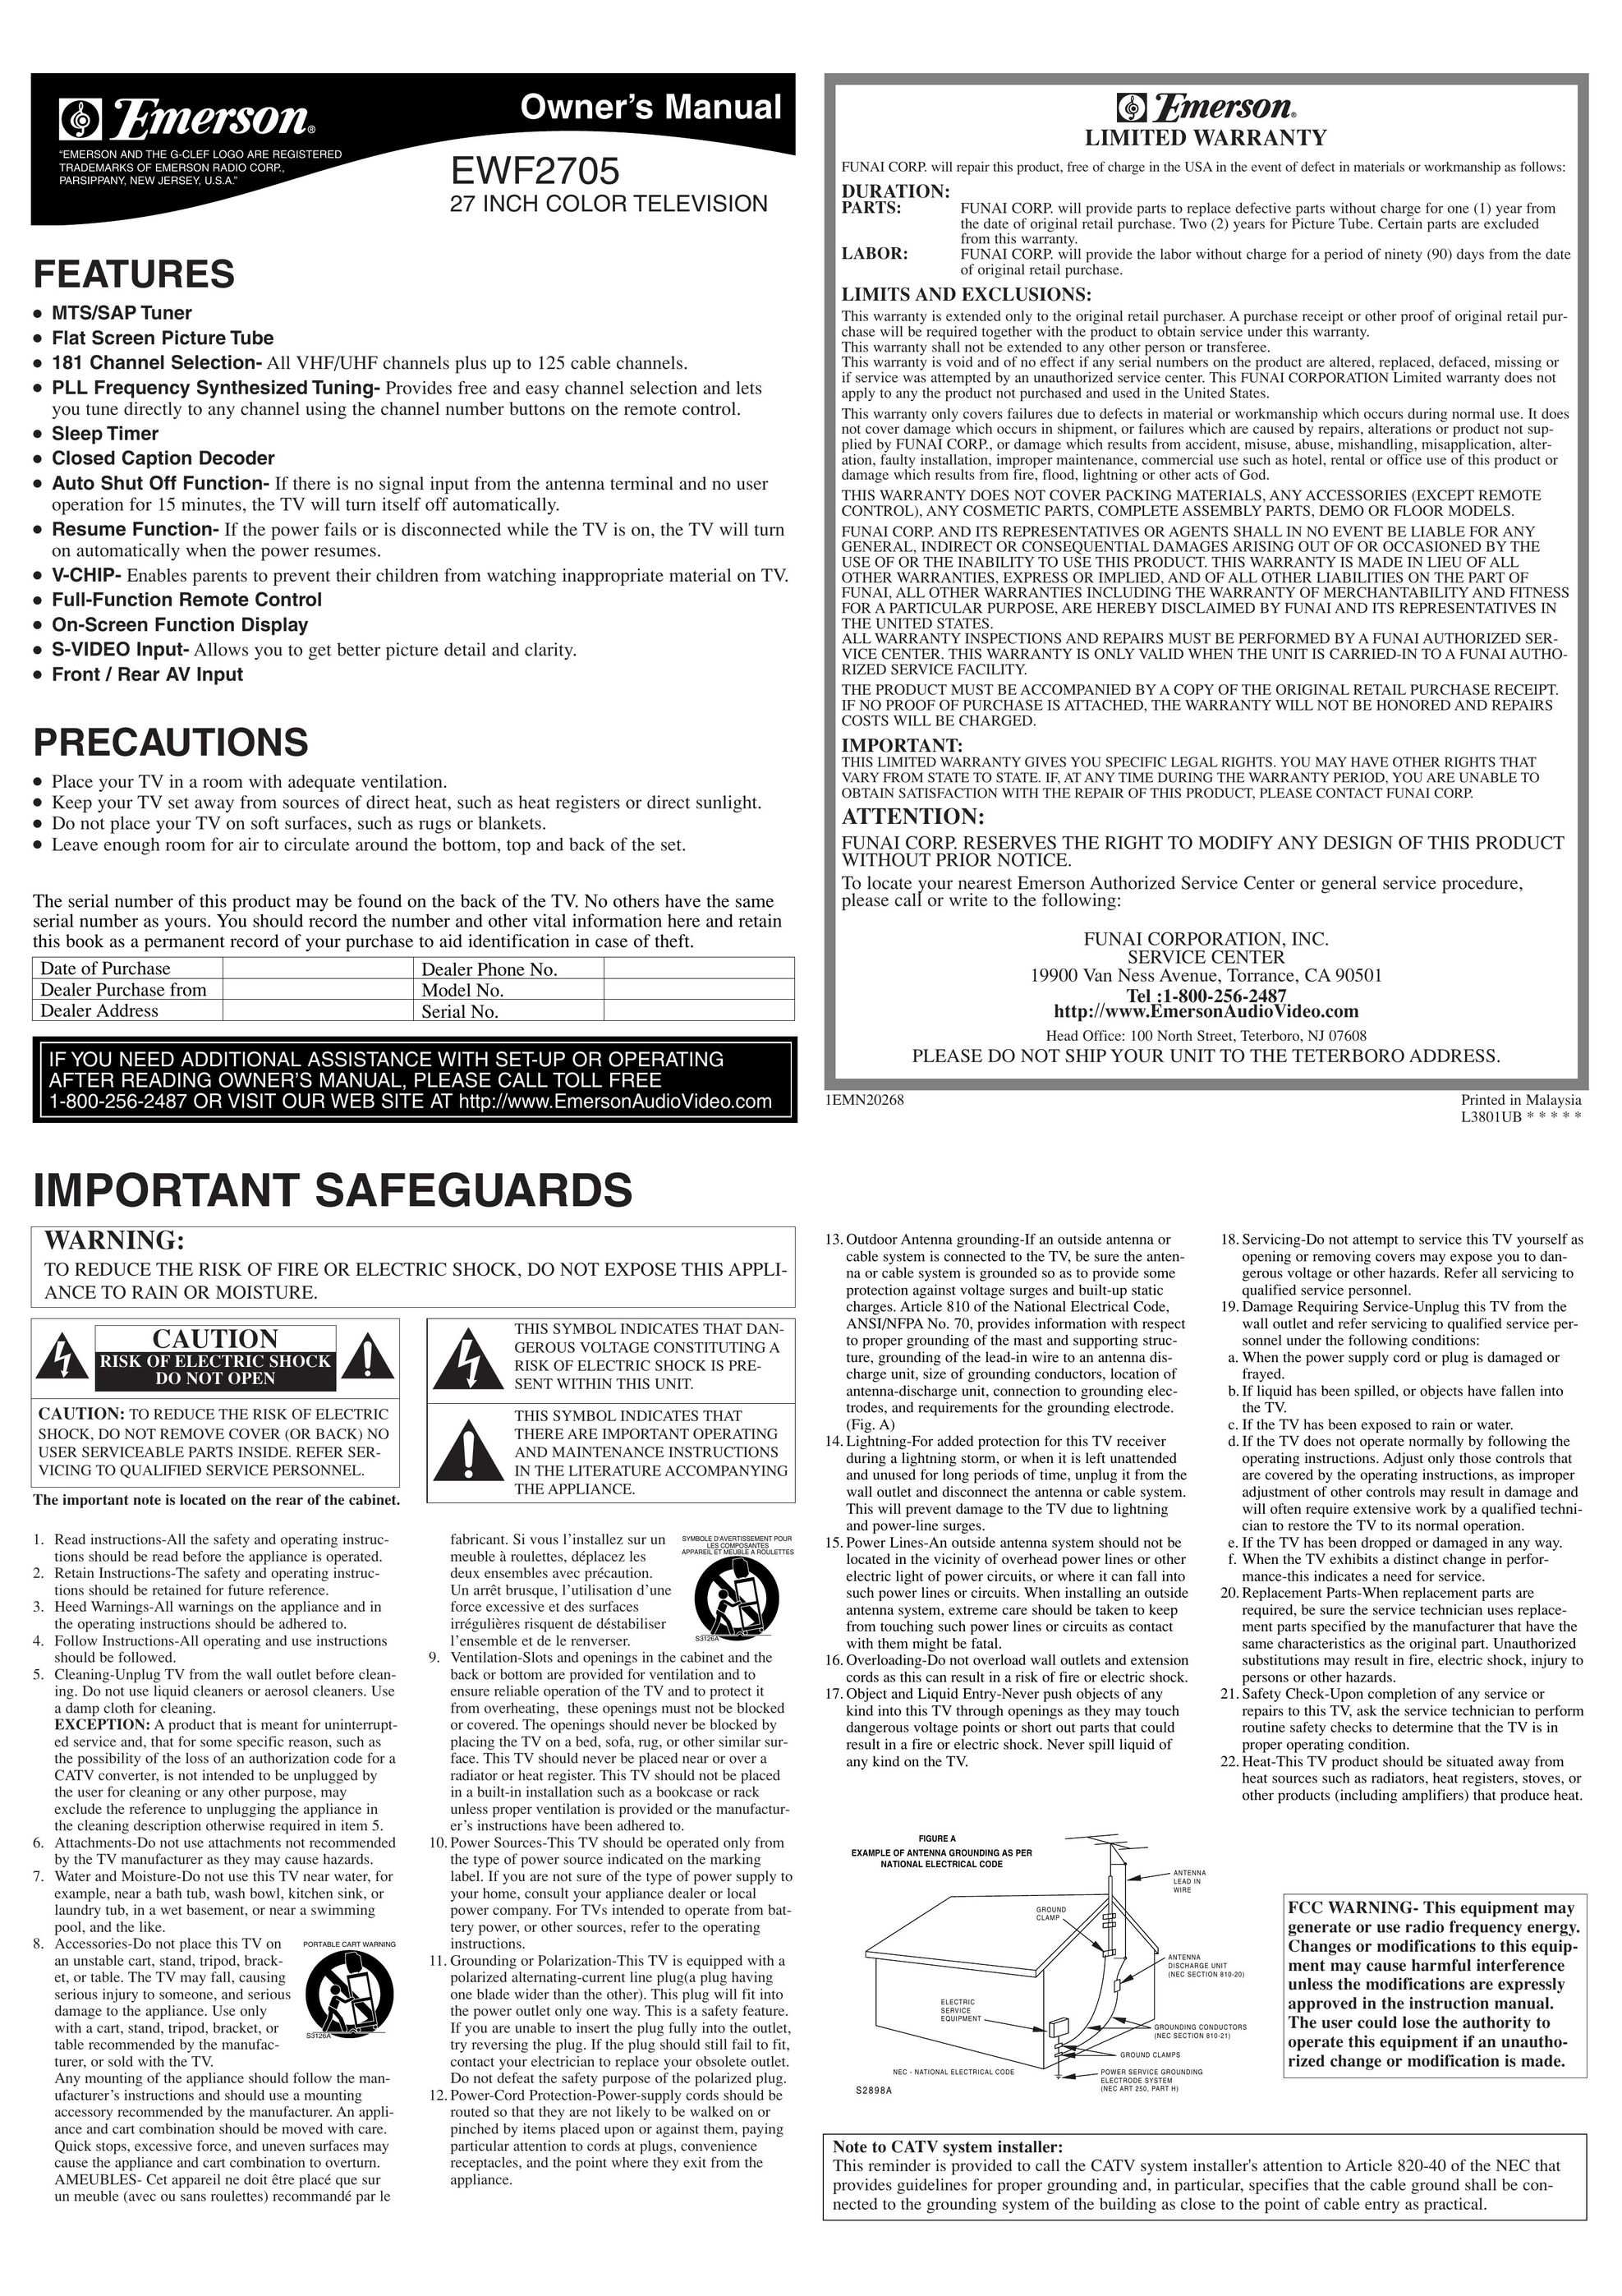 Emerson EWF2705 CRT Television User Manual